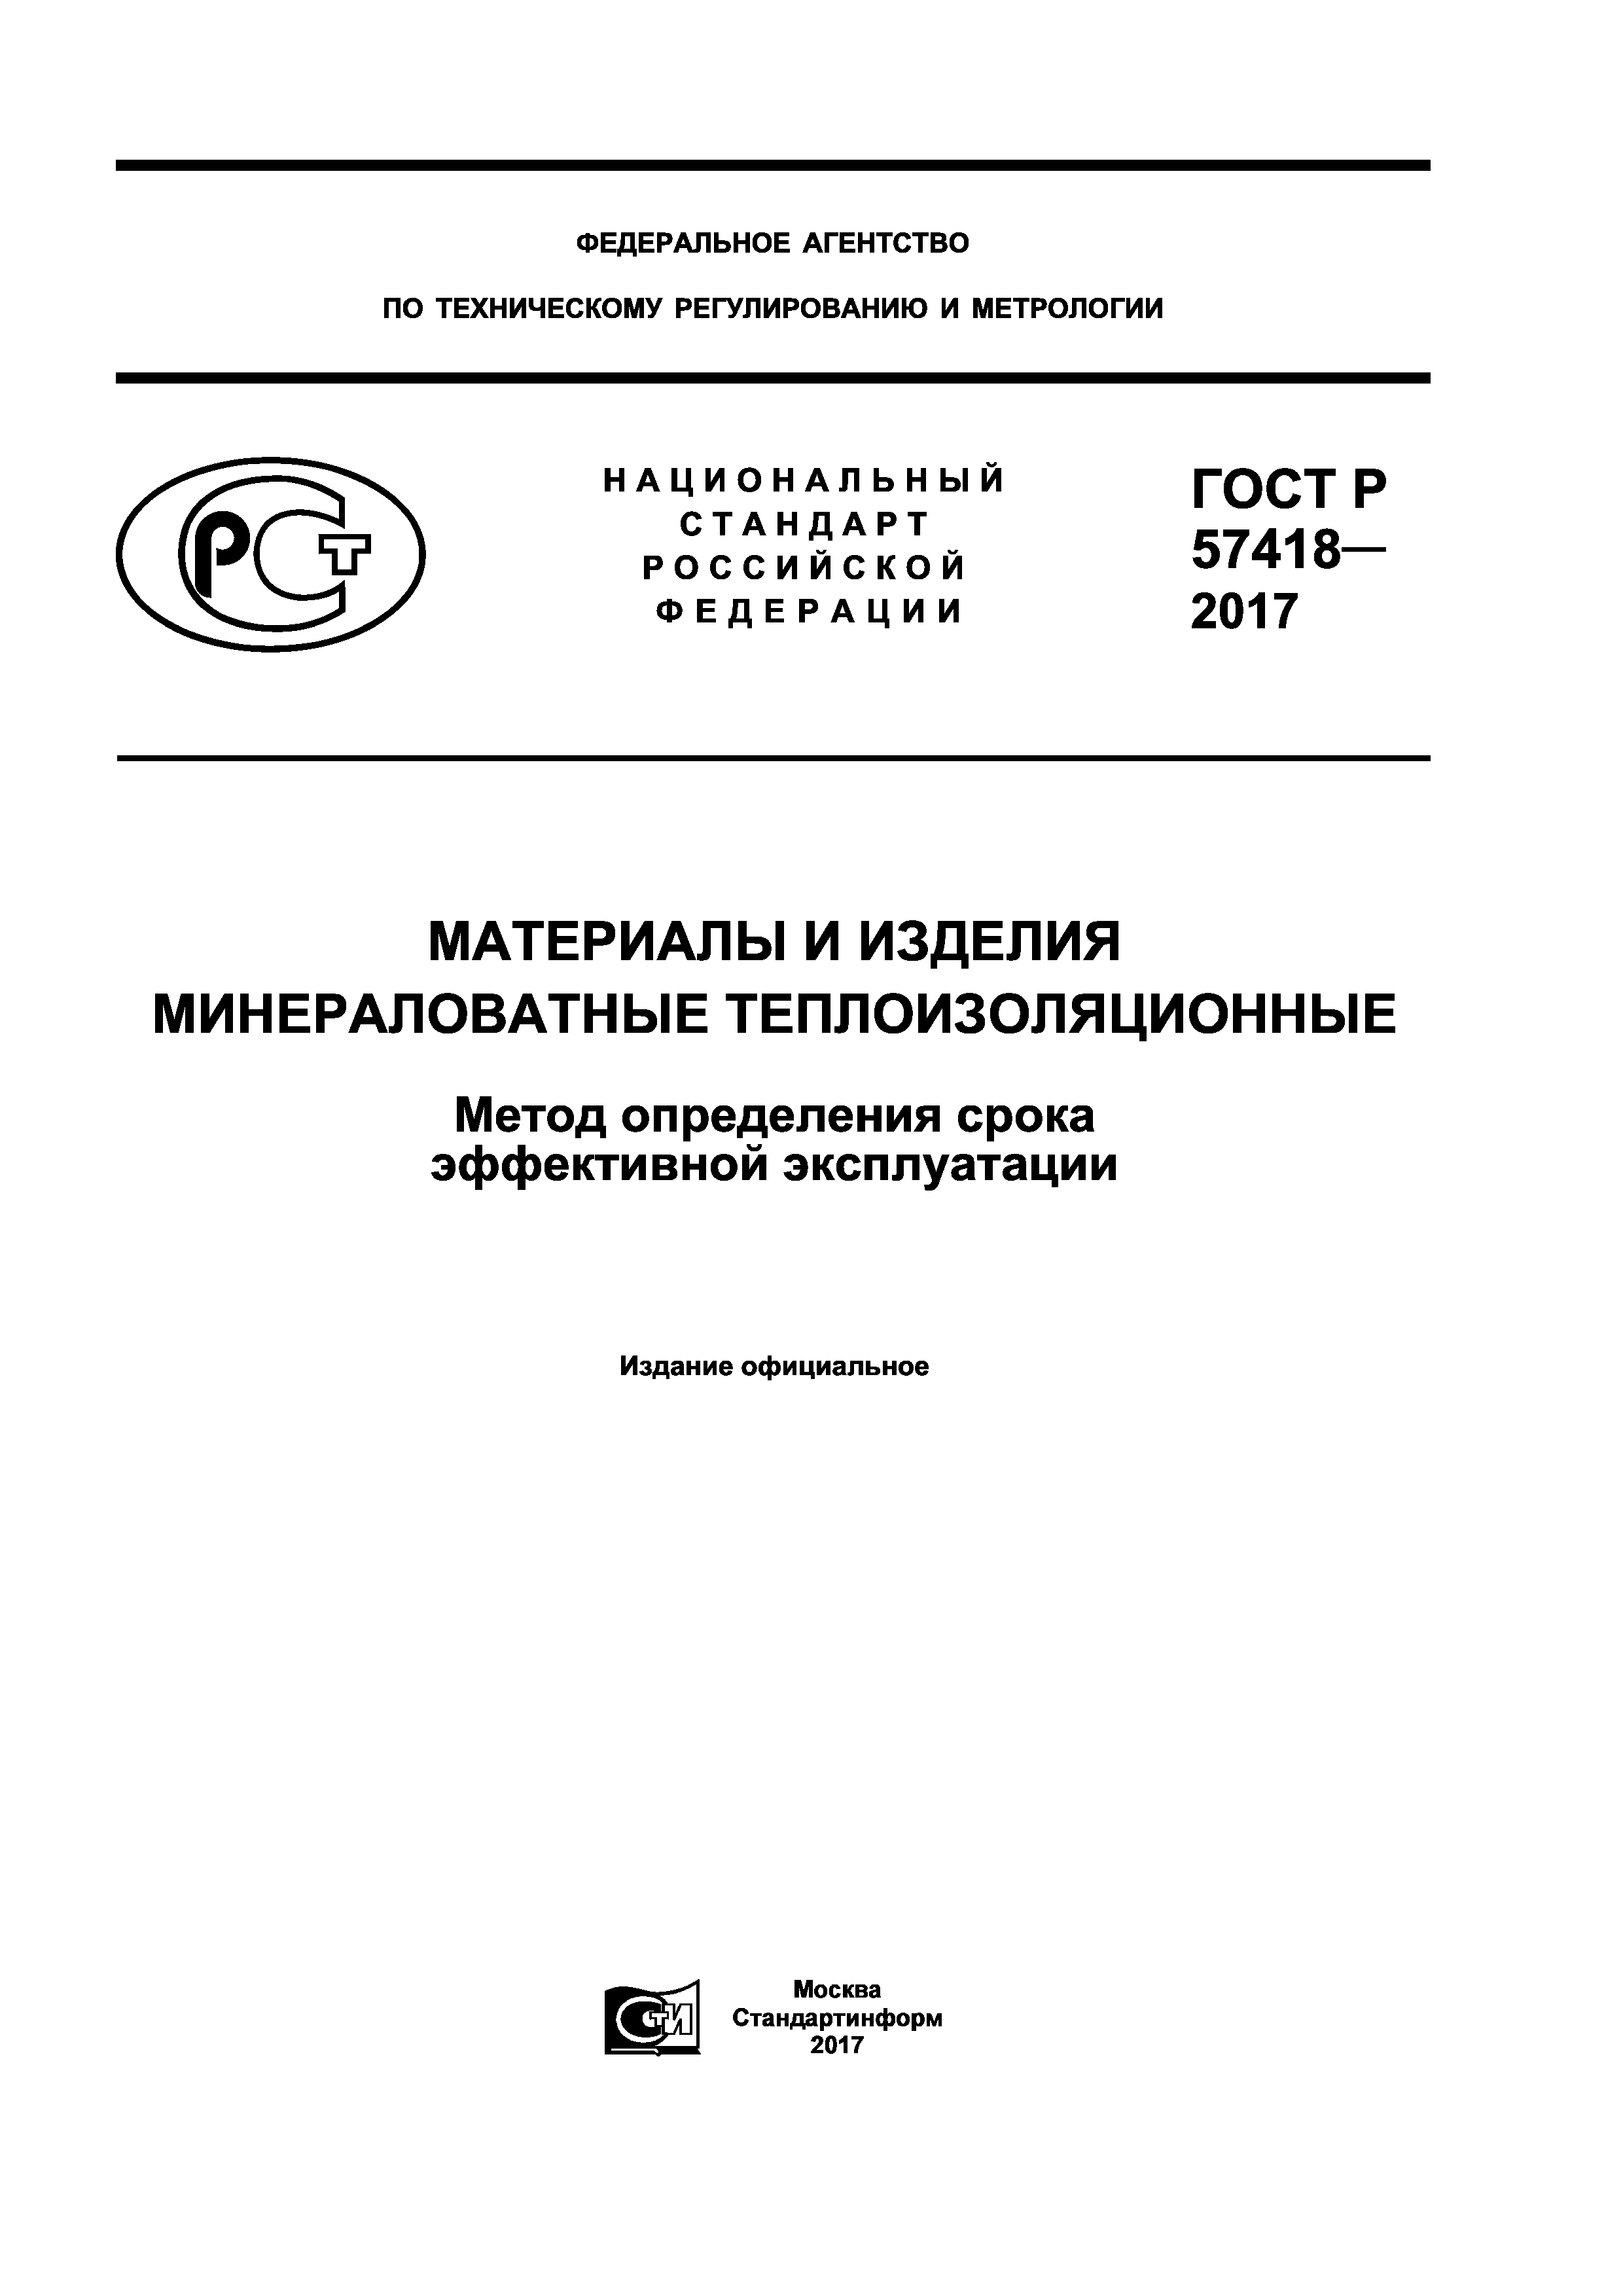 ГОСТ Р 57418-2017